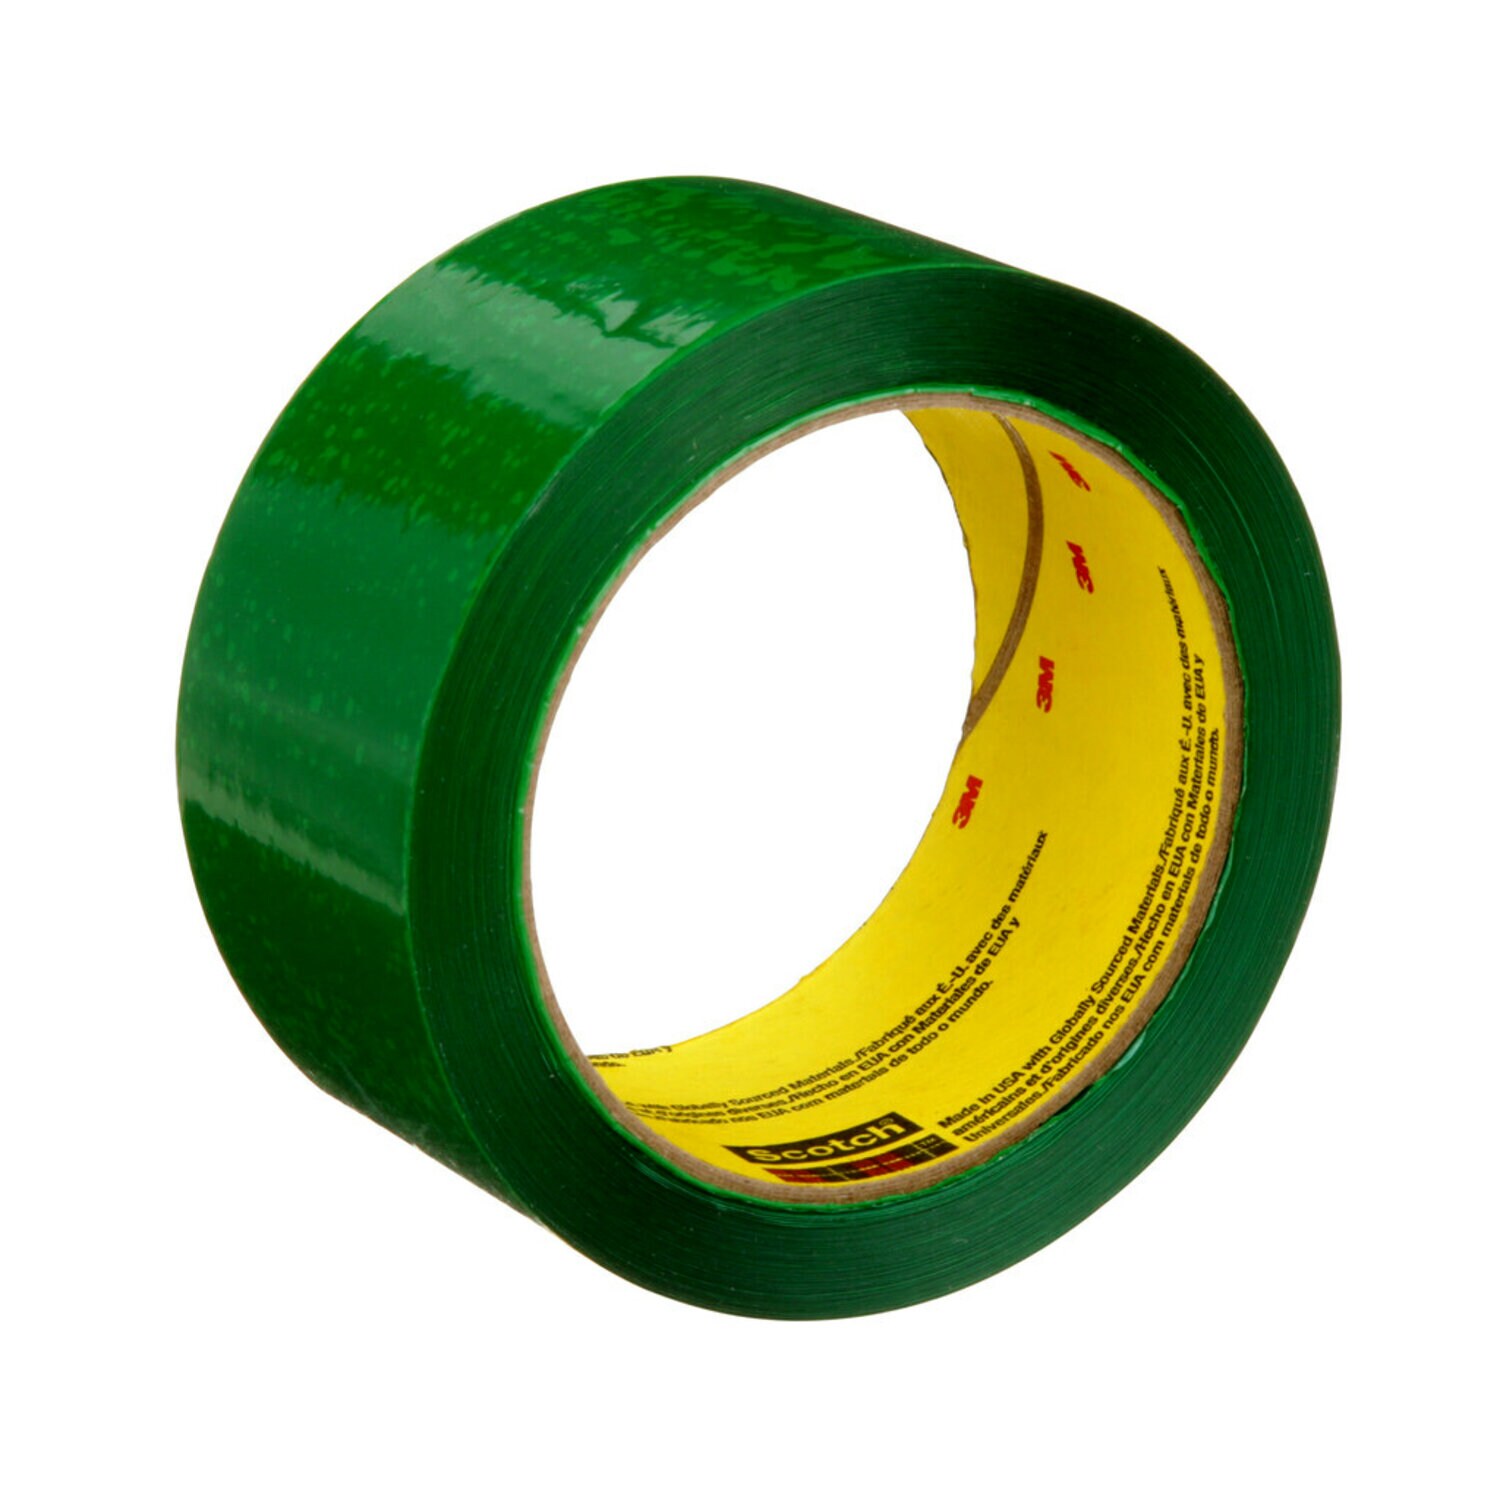 7000123636 - Scotch Box Sealing Tape 373, Green, 48 mm x 50 m, 36/Case